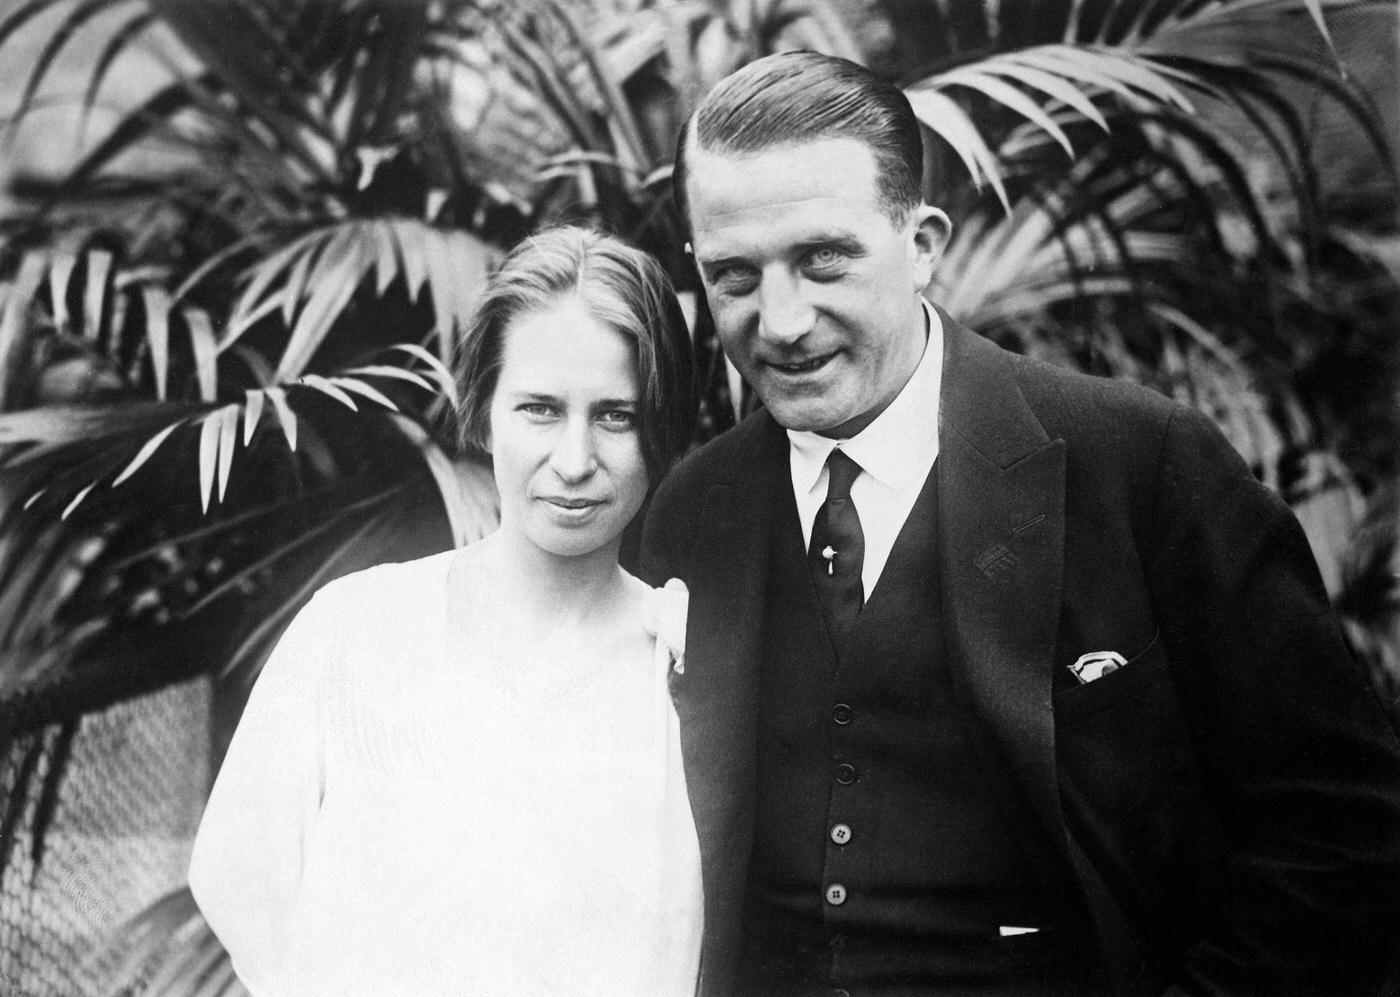 Clärenore Stinnes with Her Husband Carl-Axel Söderström, 1920s